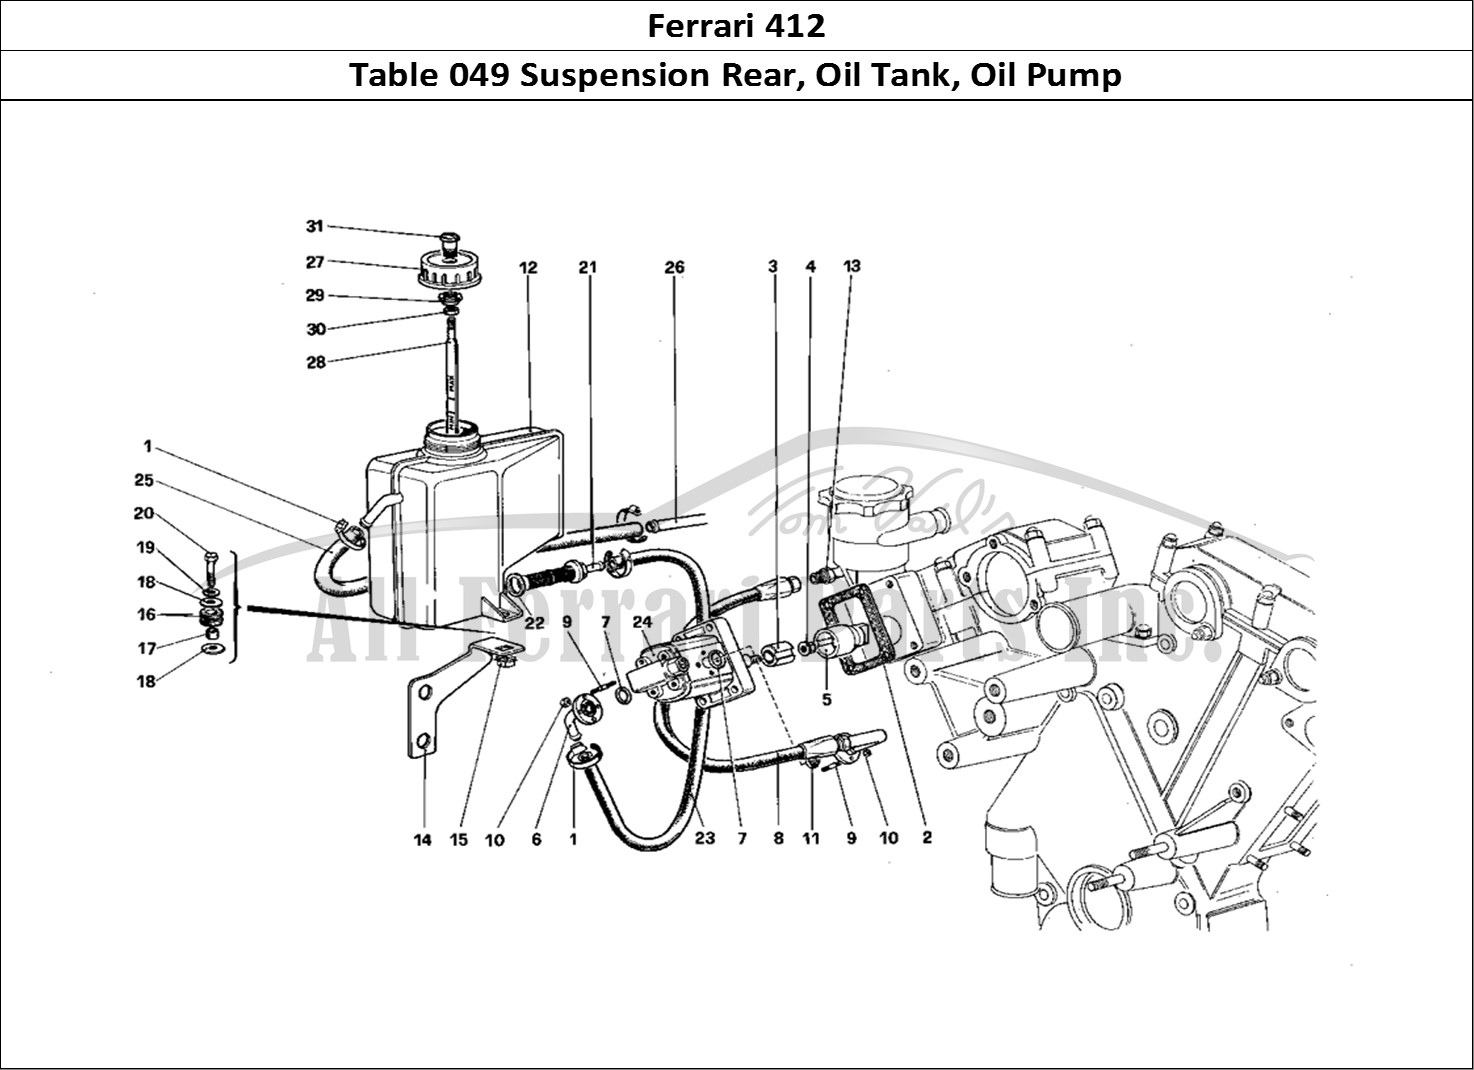 Ferrari Parts Ferrari 412 (Mechanical) Page 049 Rear Suspension - Oil Tan